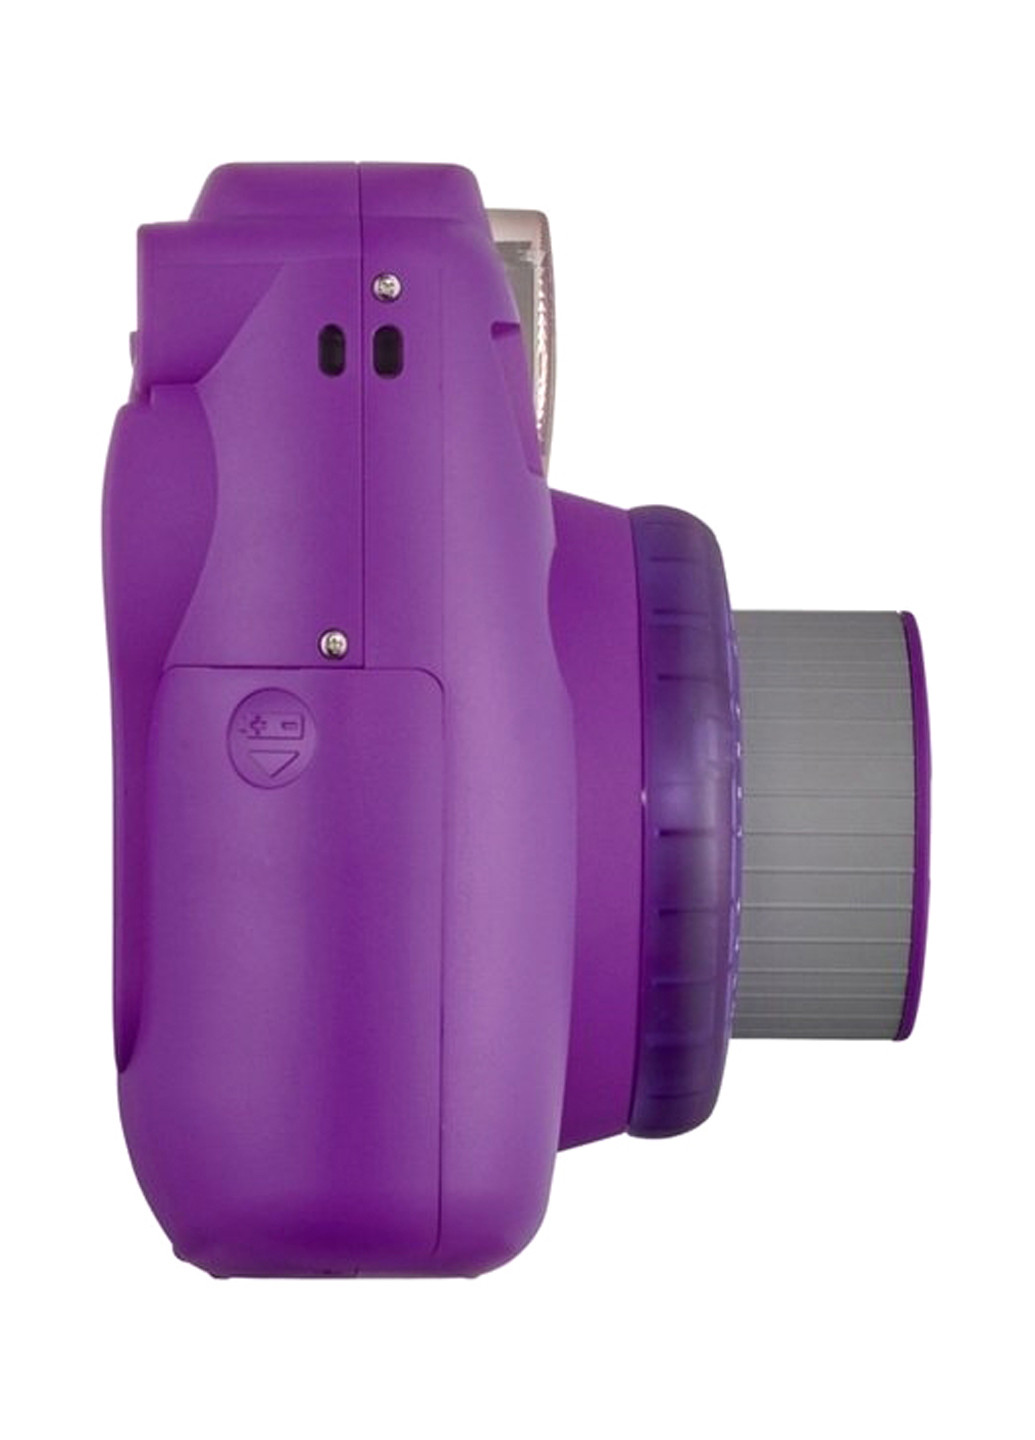 Фотокамера моментальной печати INSTAX Mini 9 Purple Fujifilm моментальной печати INSTAX Mini 9 Purple фиолетовый